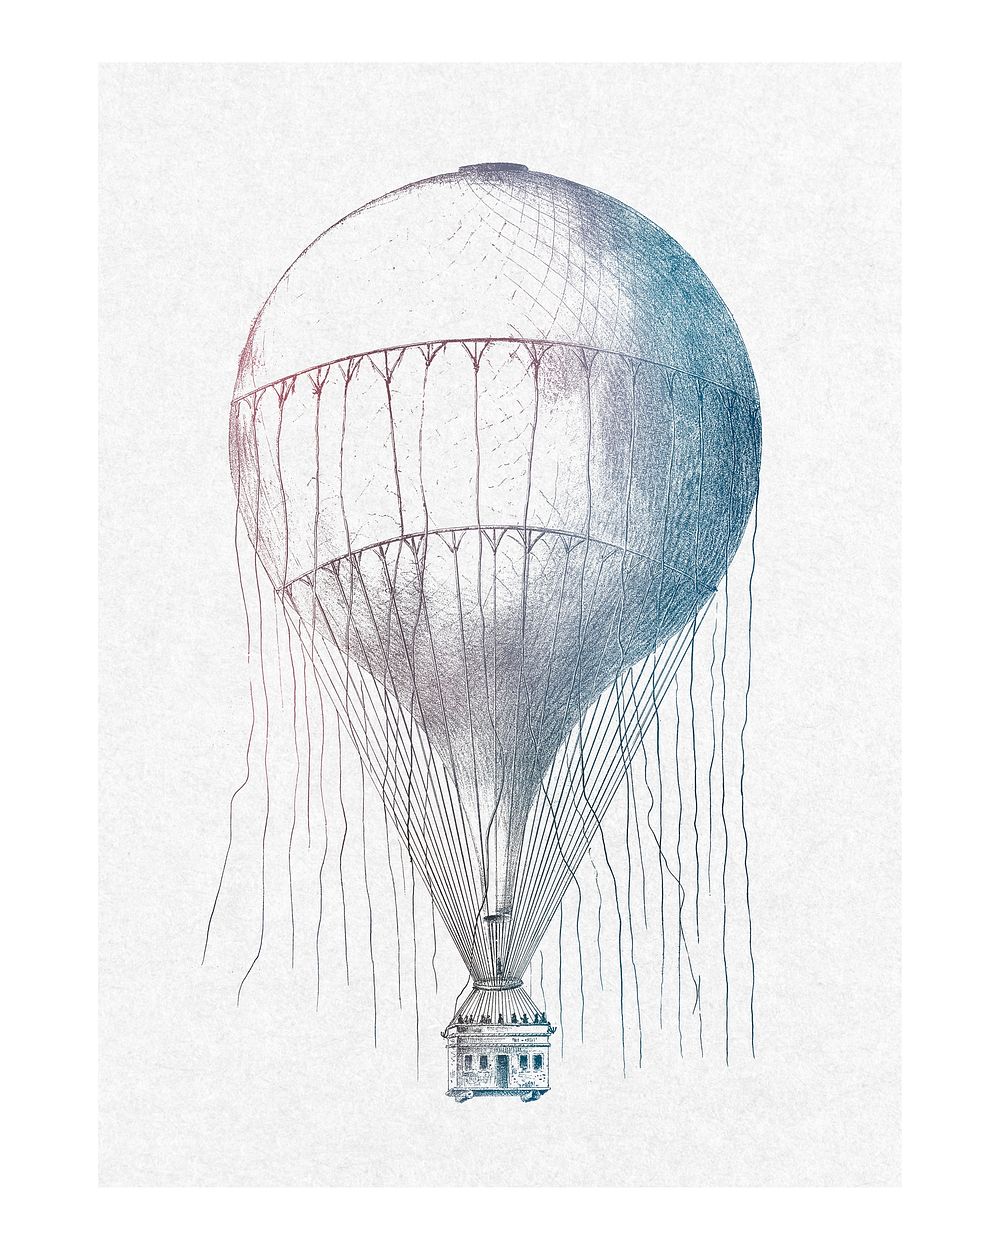 Hot air balloon vintage illustration wall art print and poster design remix from original artwork.